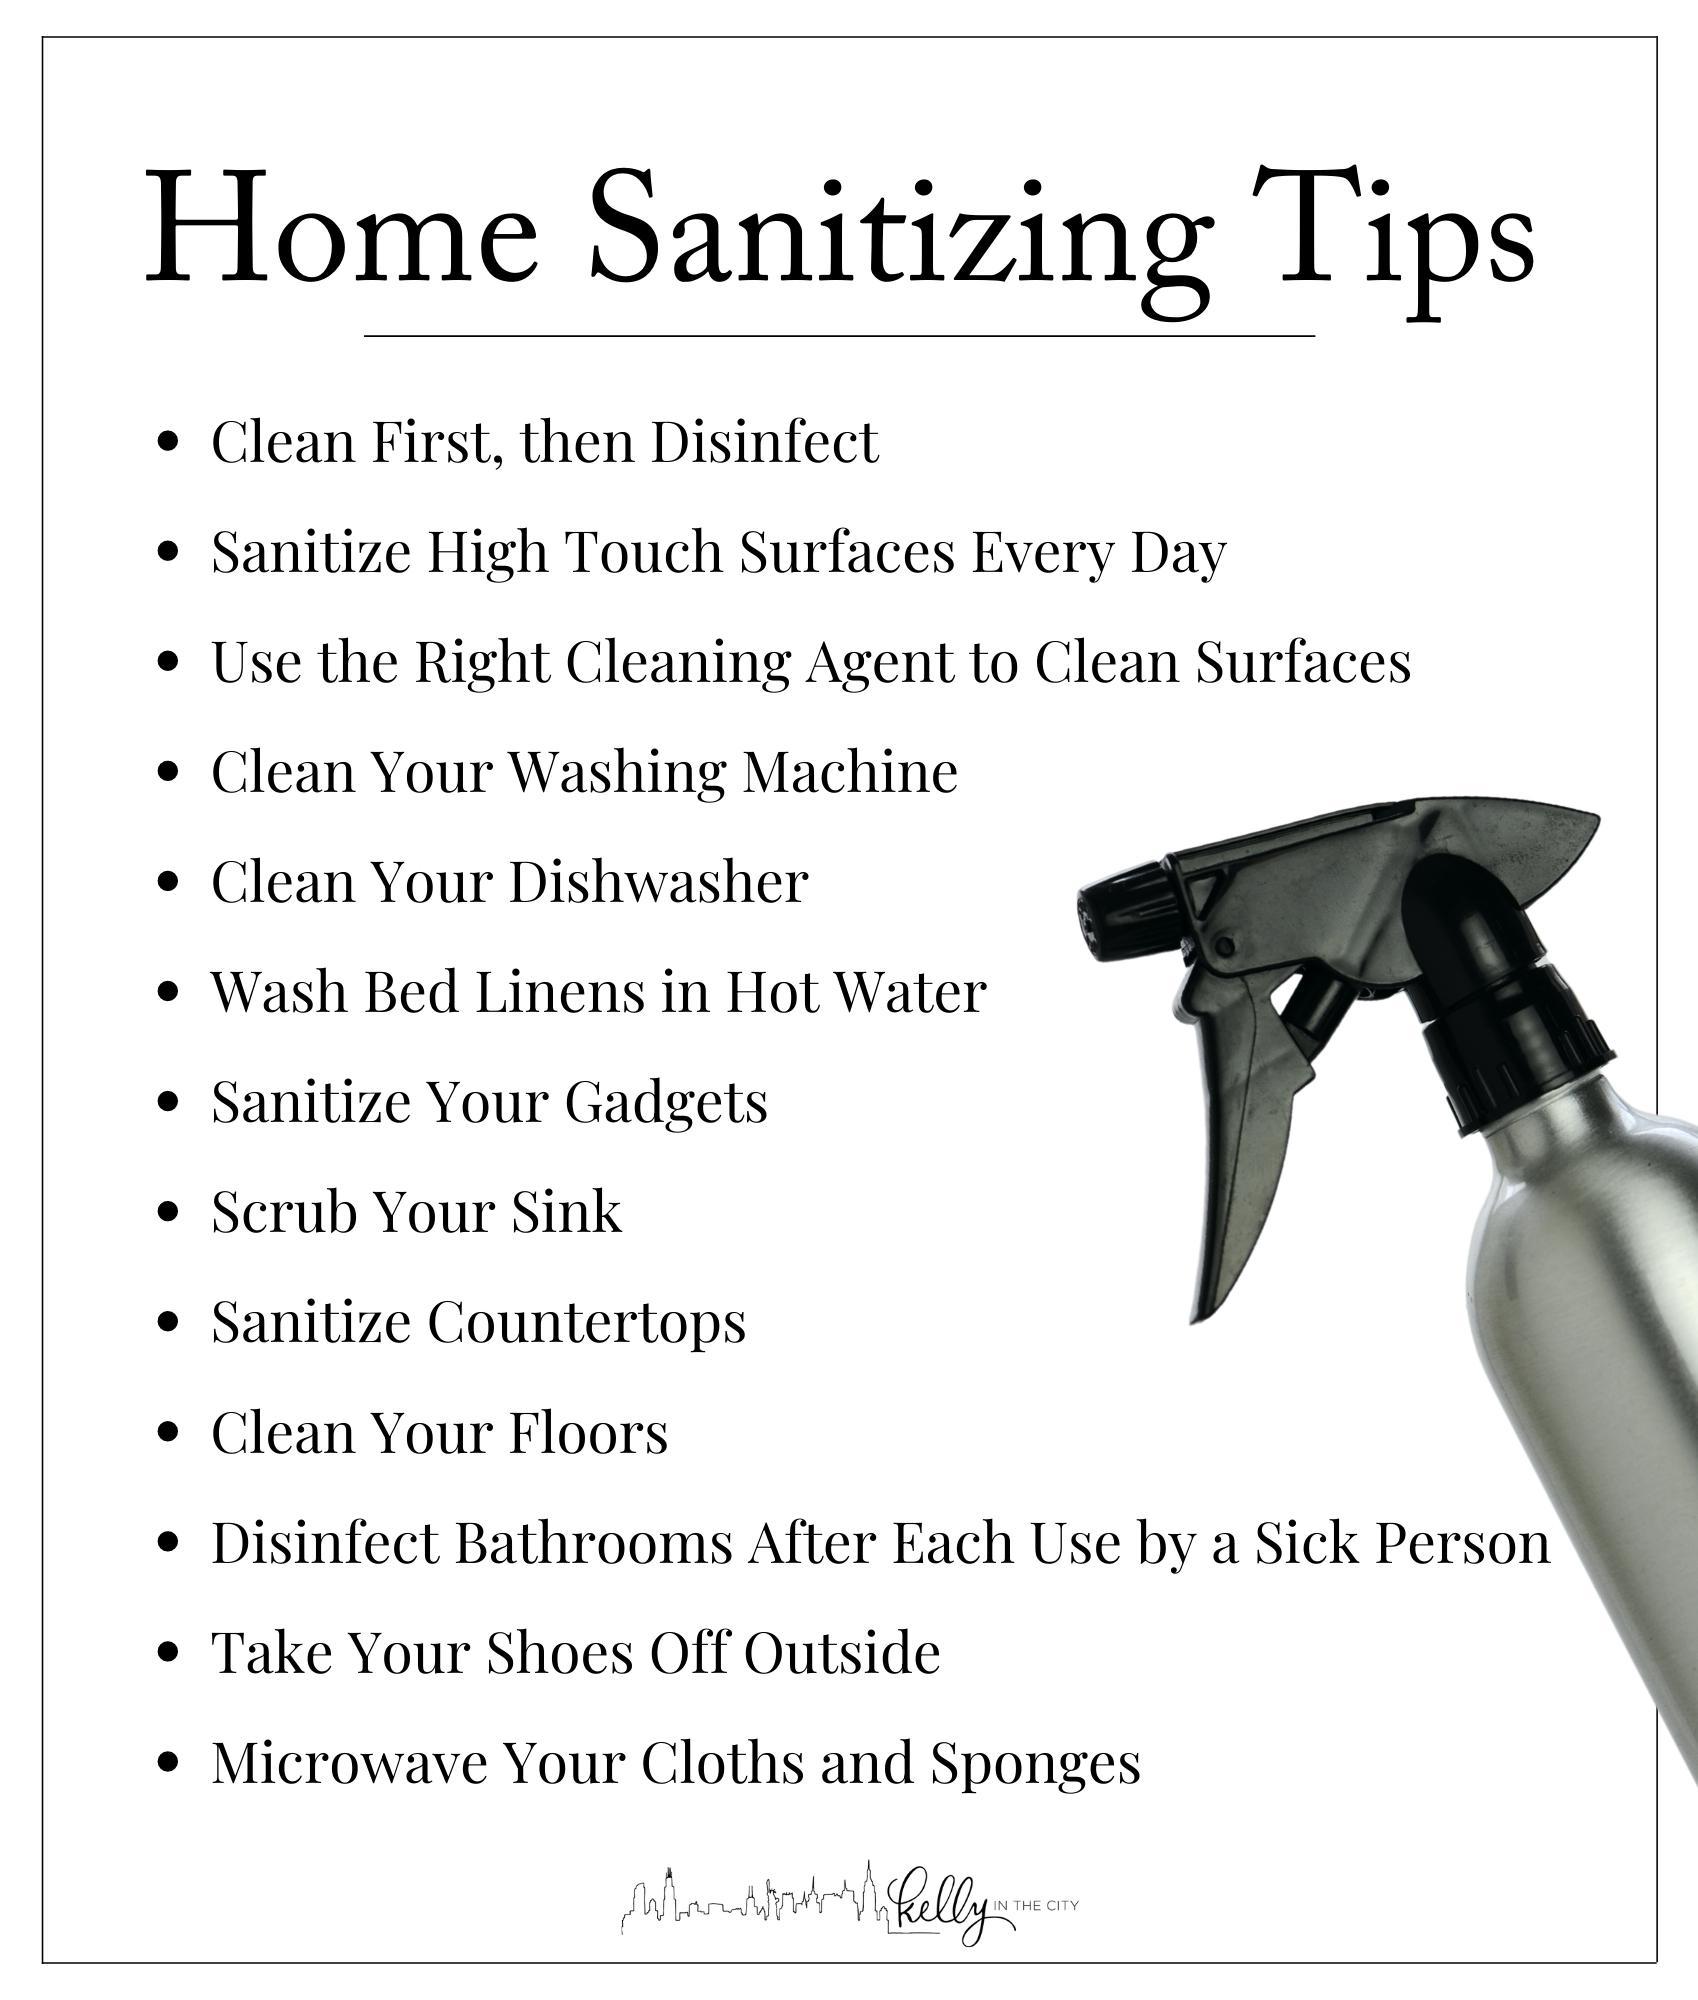 Home Sanitizing Tips